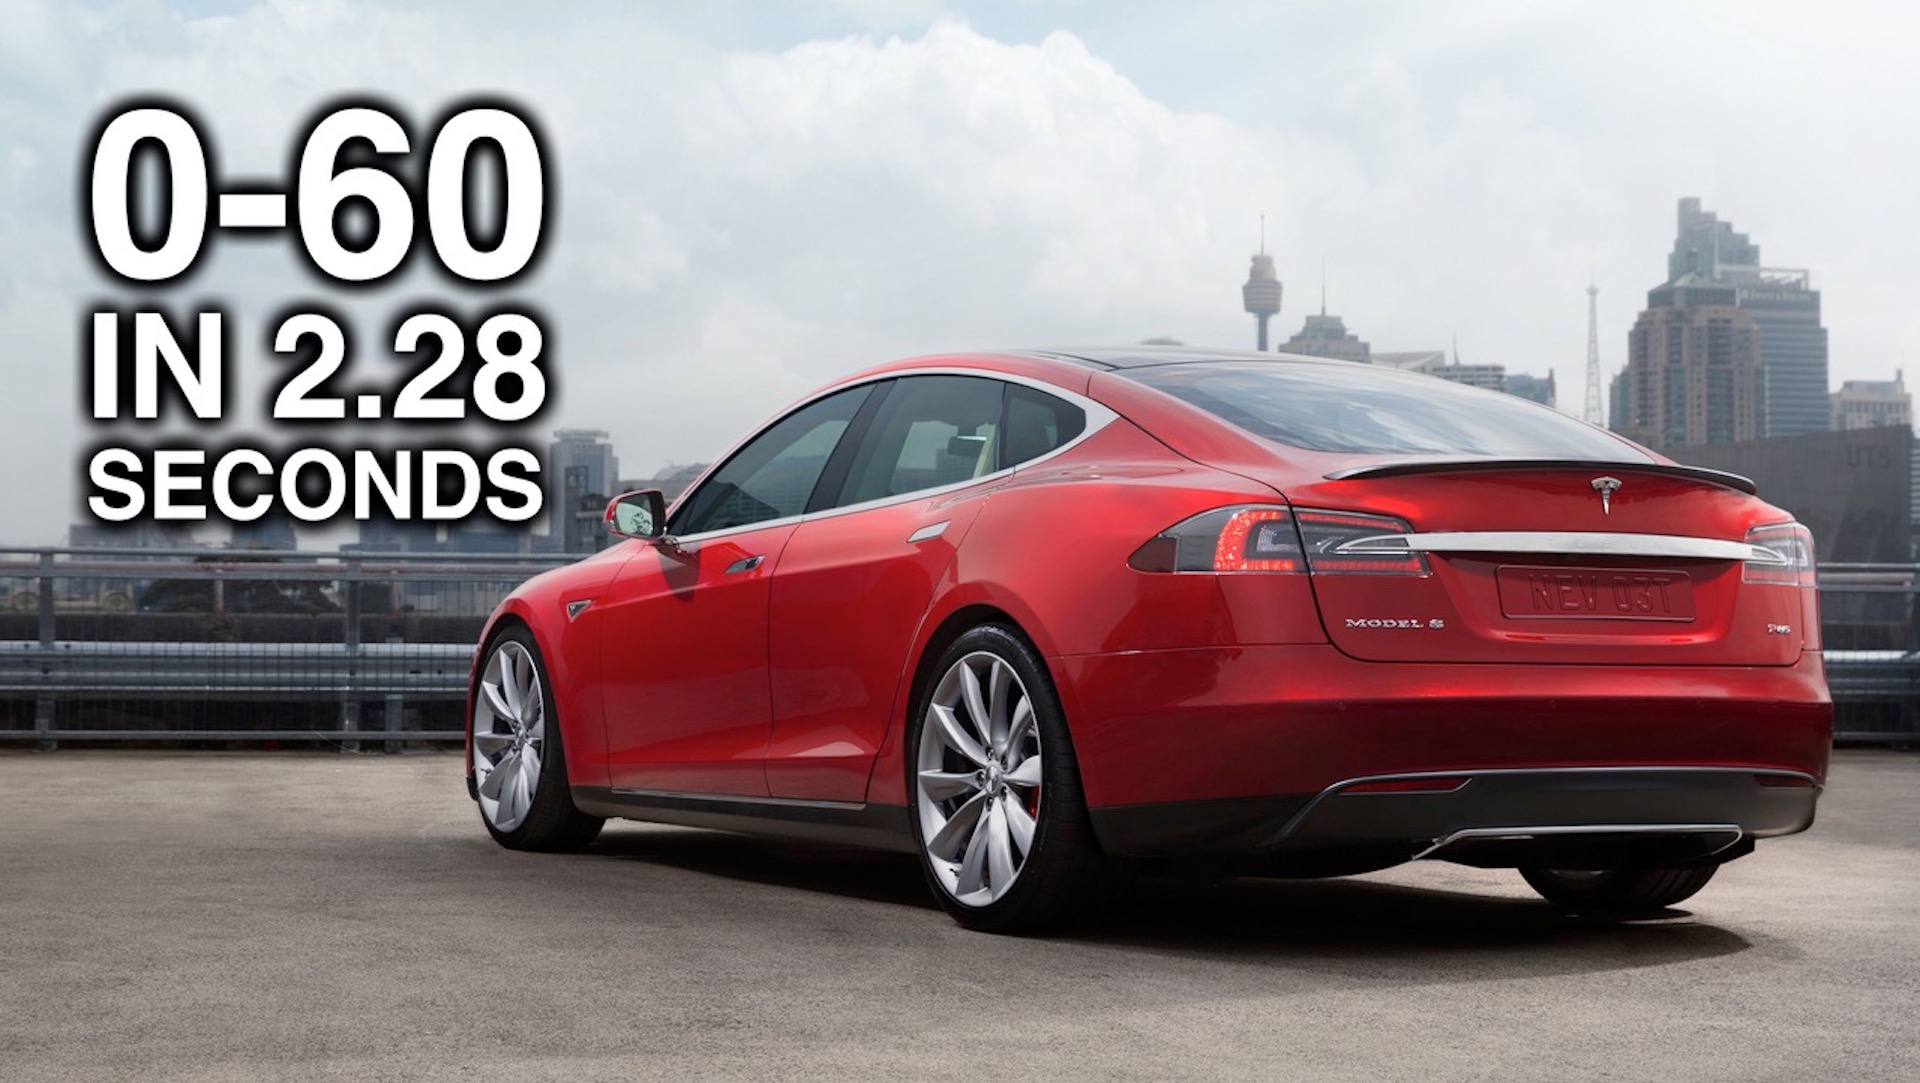 Metafor Bestemt bagage Video explains how Tesla Model S P100D takes just 2.28 seconds to hit 60 mph